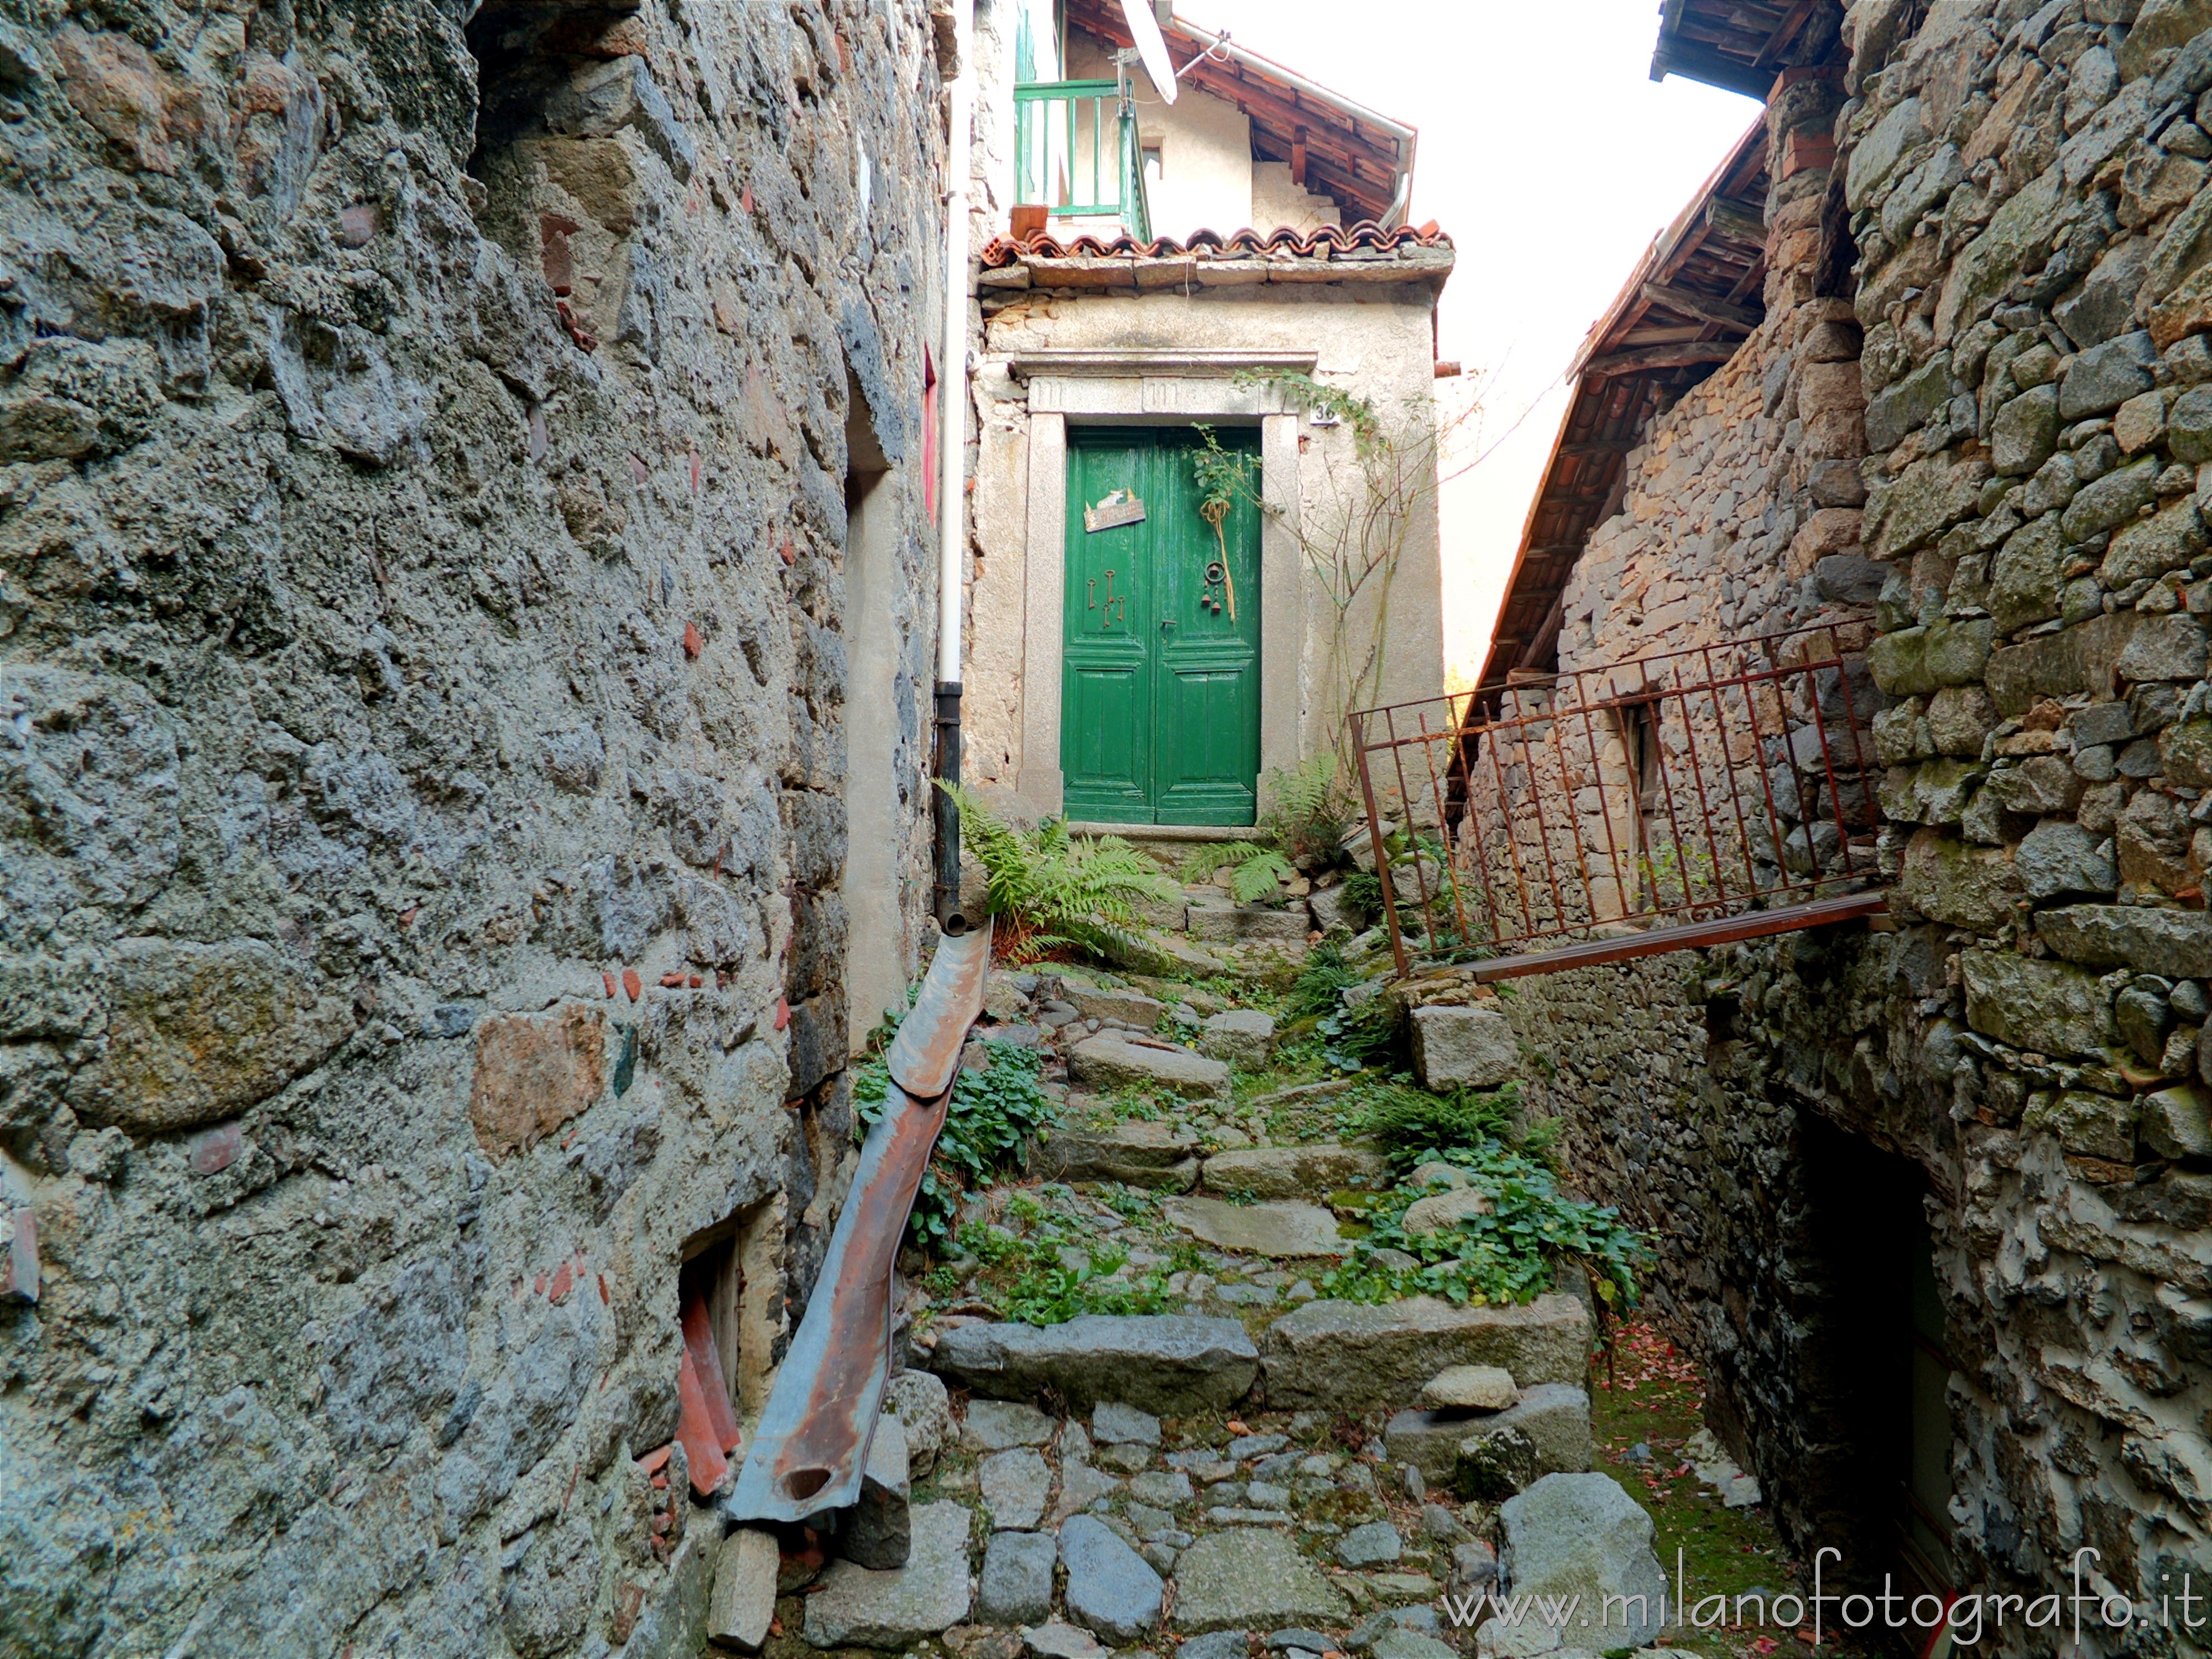 Campiglia Cervo (Biella, Italy): Entrance of an old house in the fraction Sassaia - Campiglia Cervo (Biella, Italy)